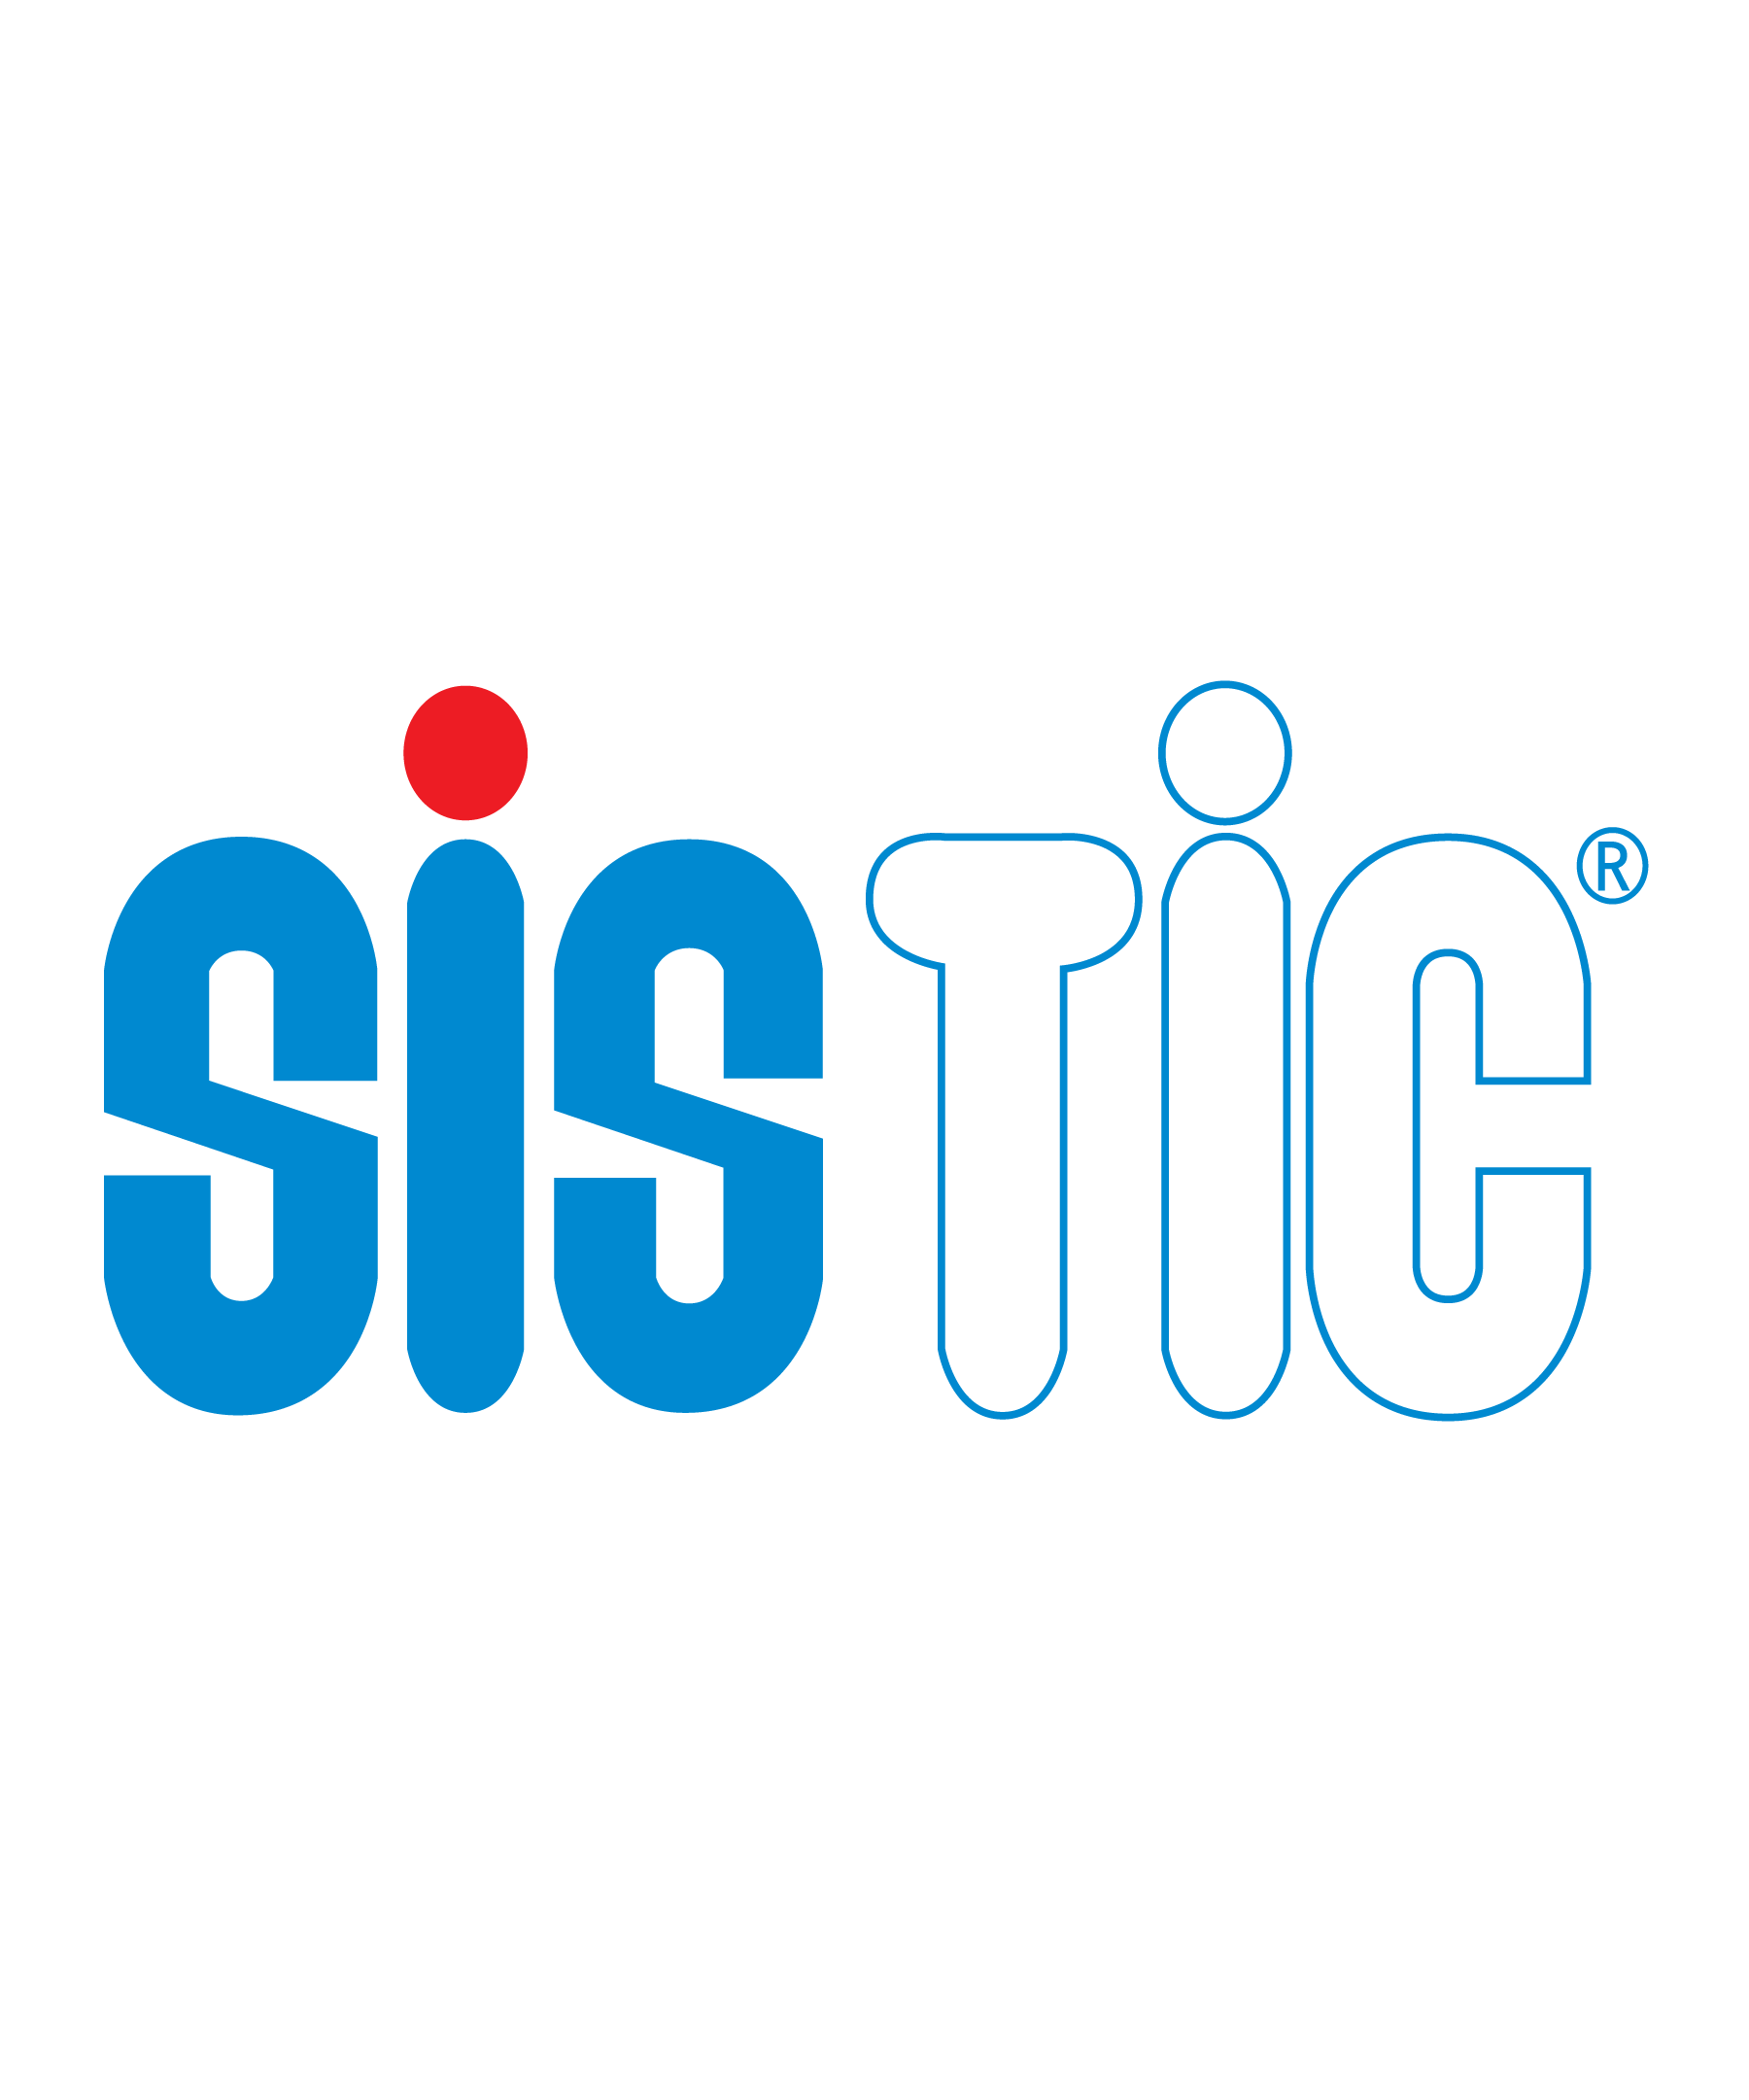 Sistic Logo